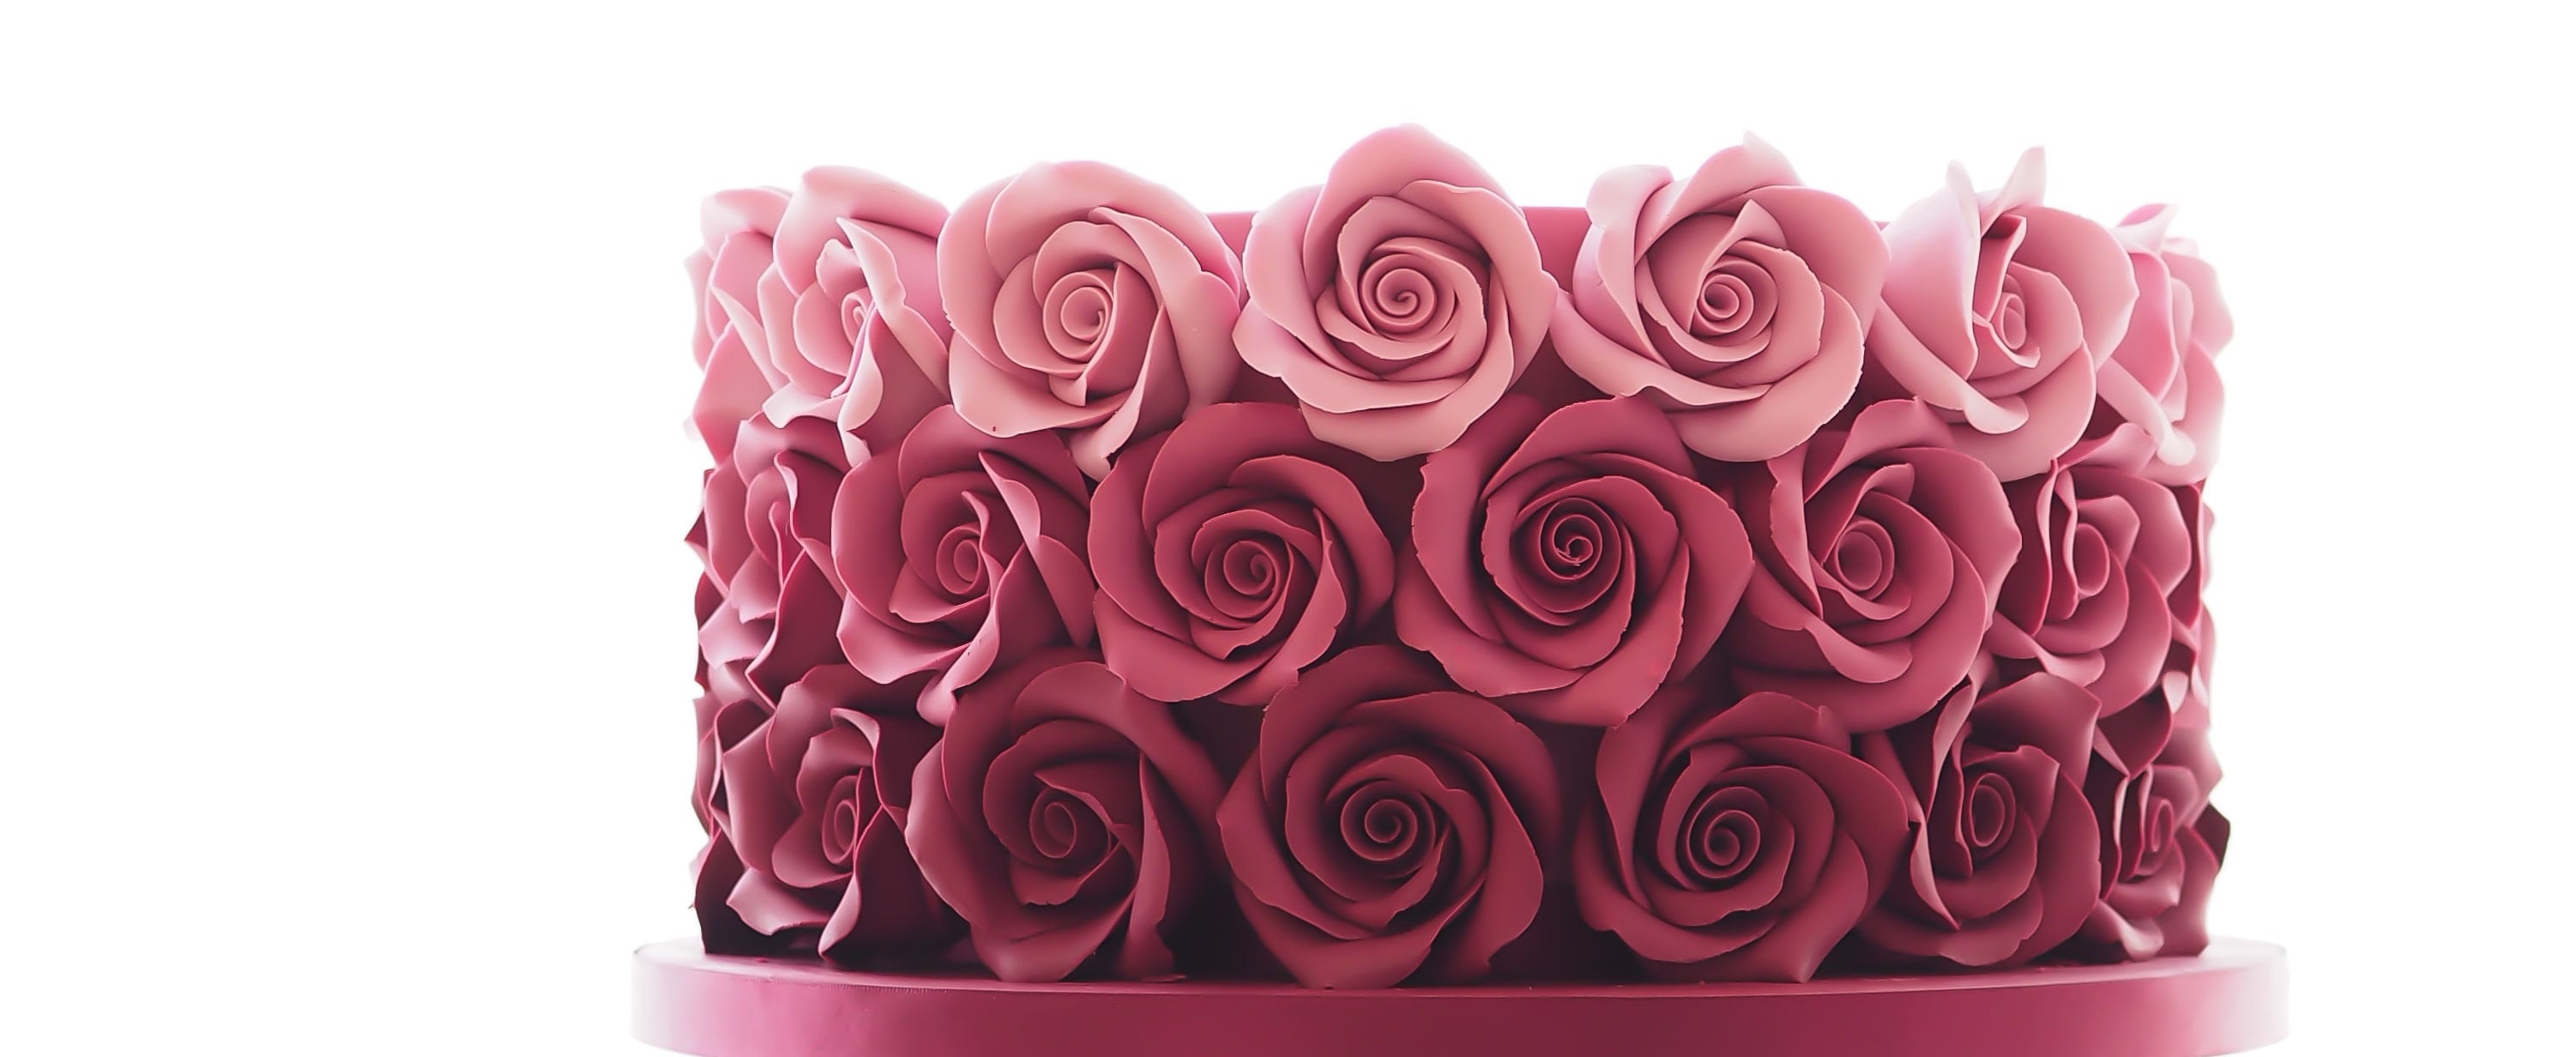 Ombre Roses Celebration Cake